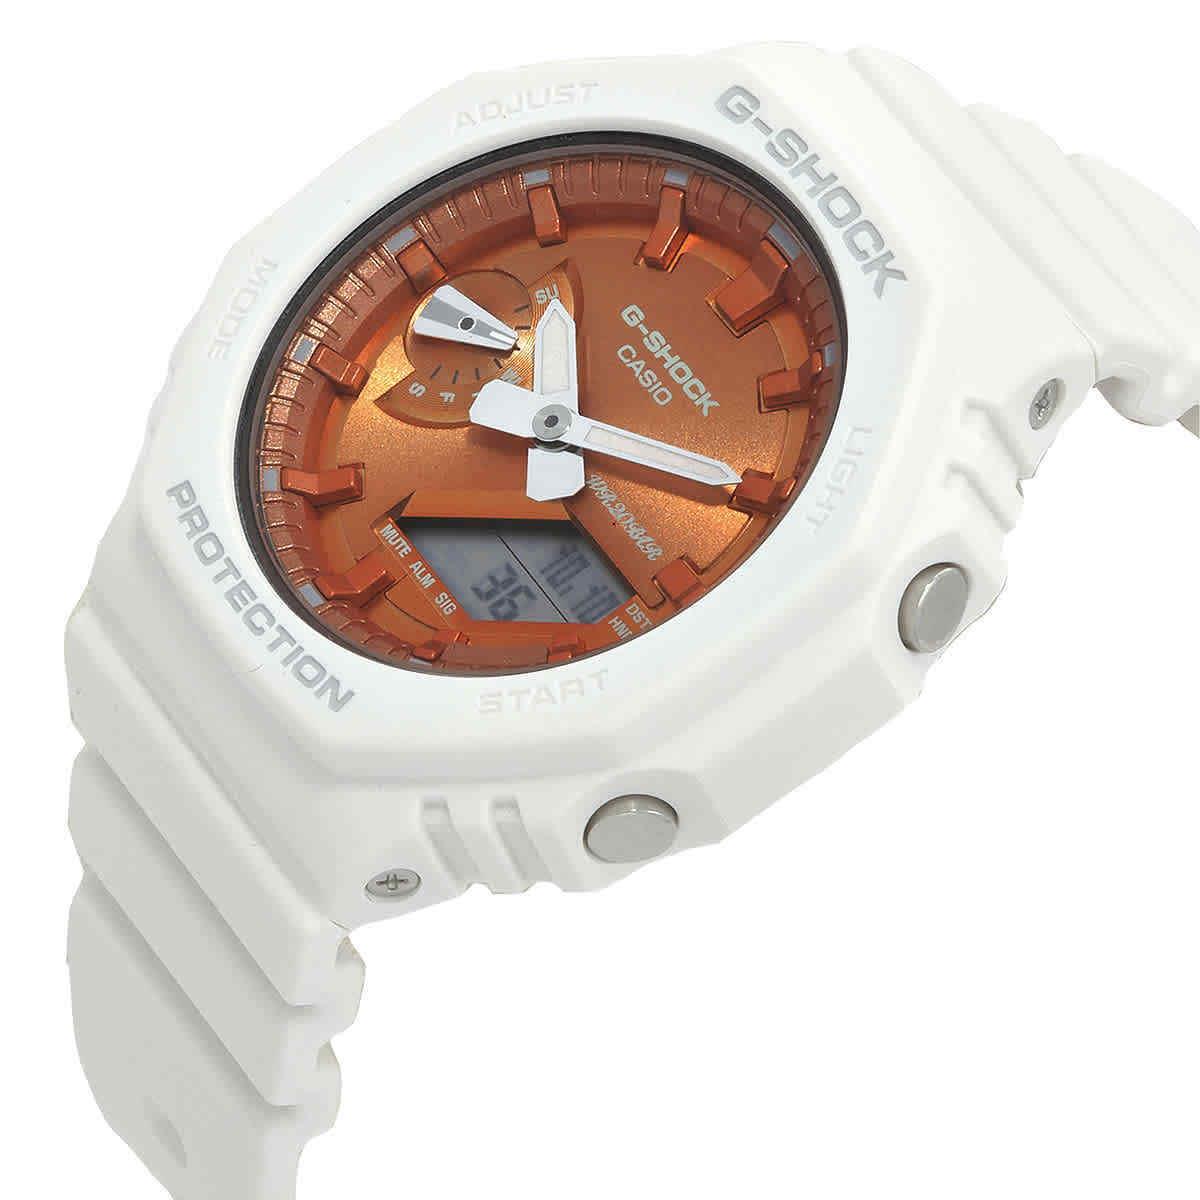 Casio G-shock Alarm World Time Quartz Analog-digital Orange Dial Watch